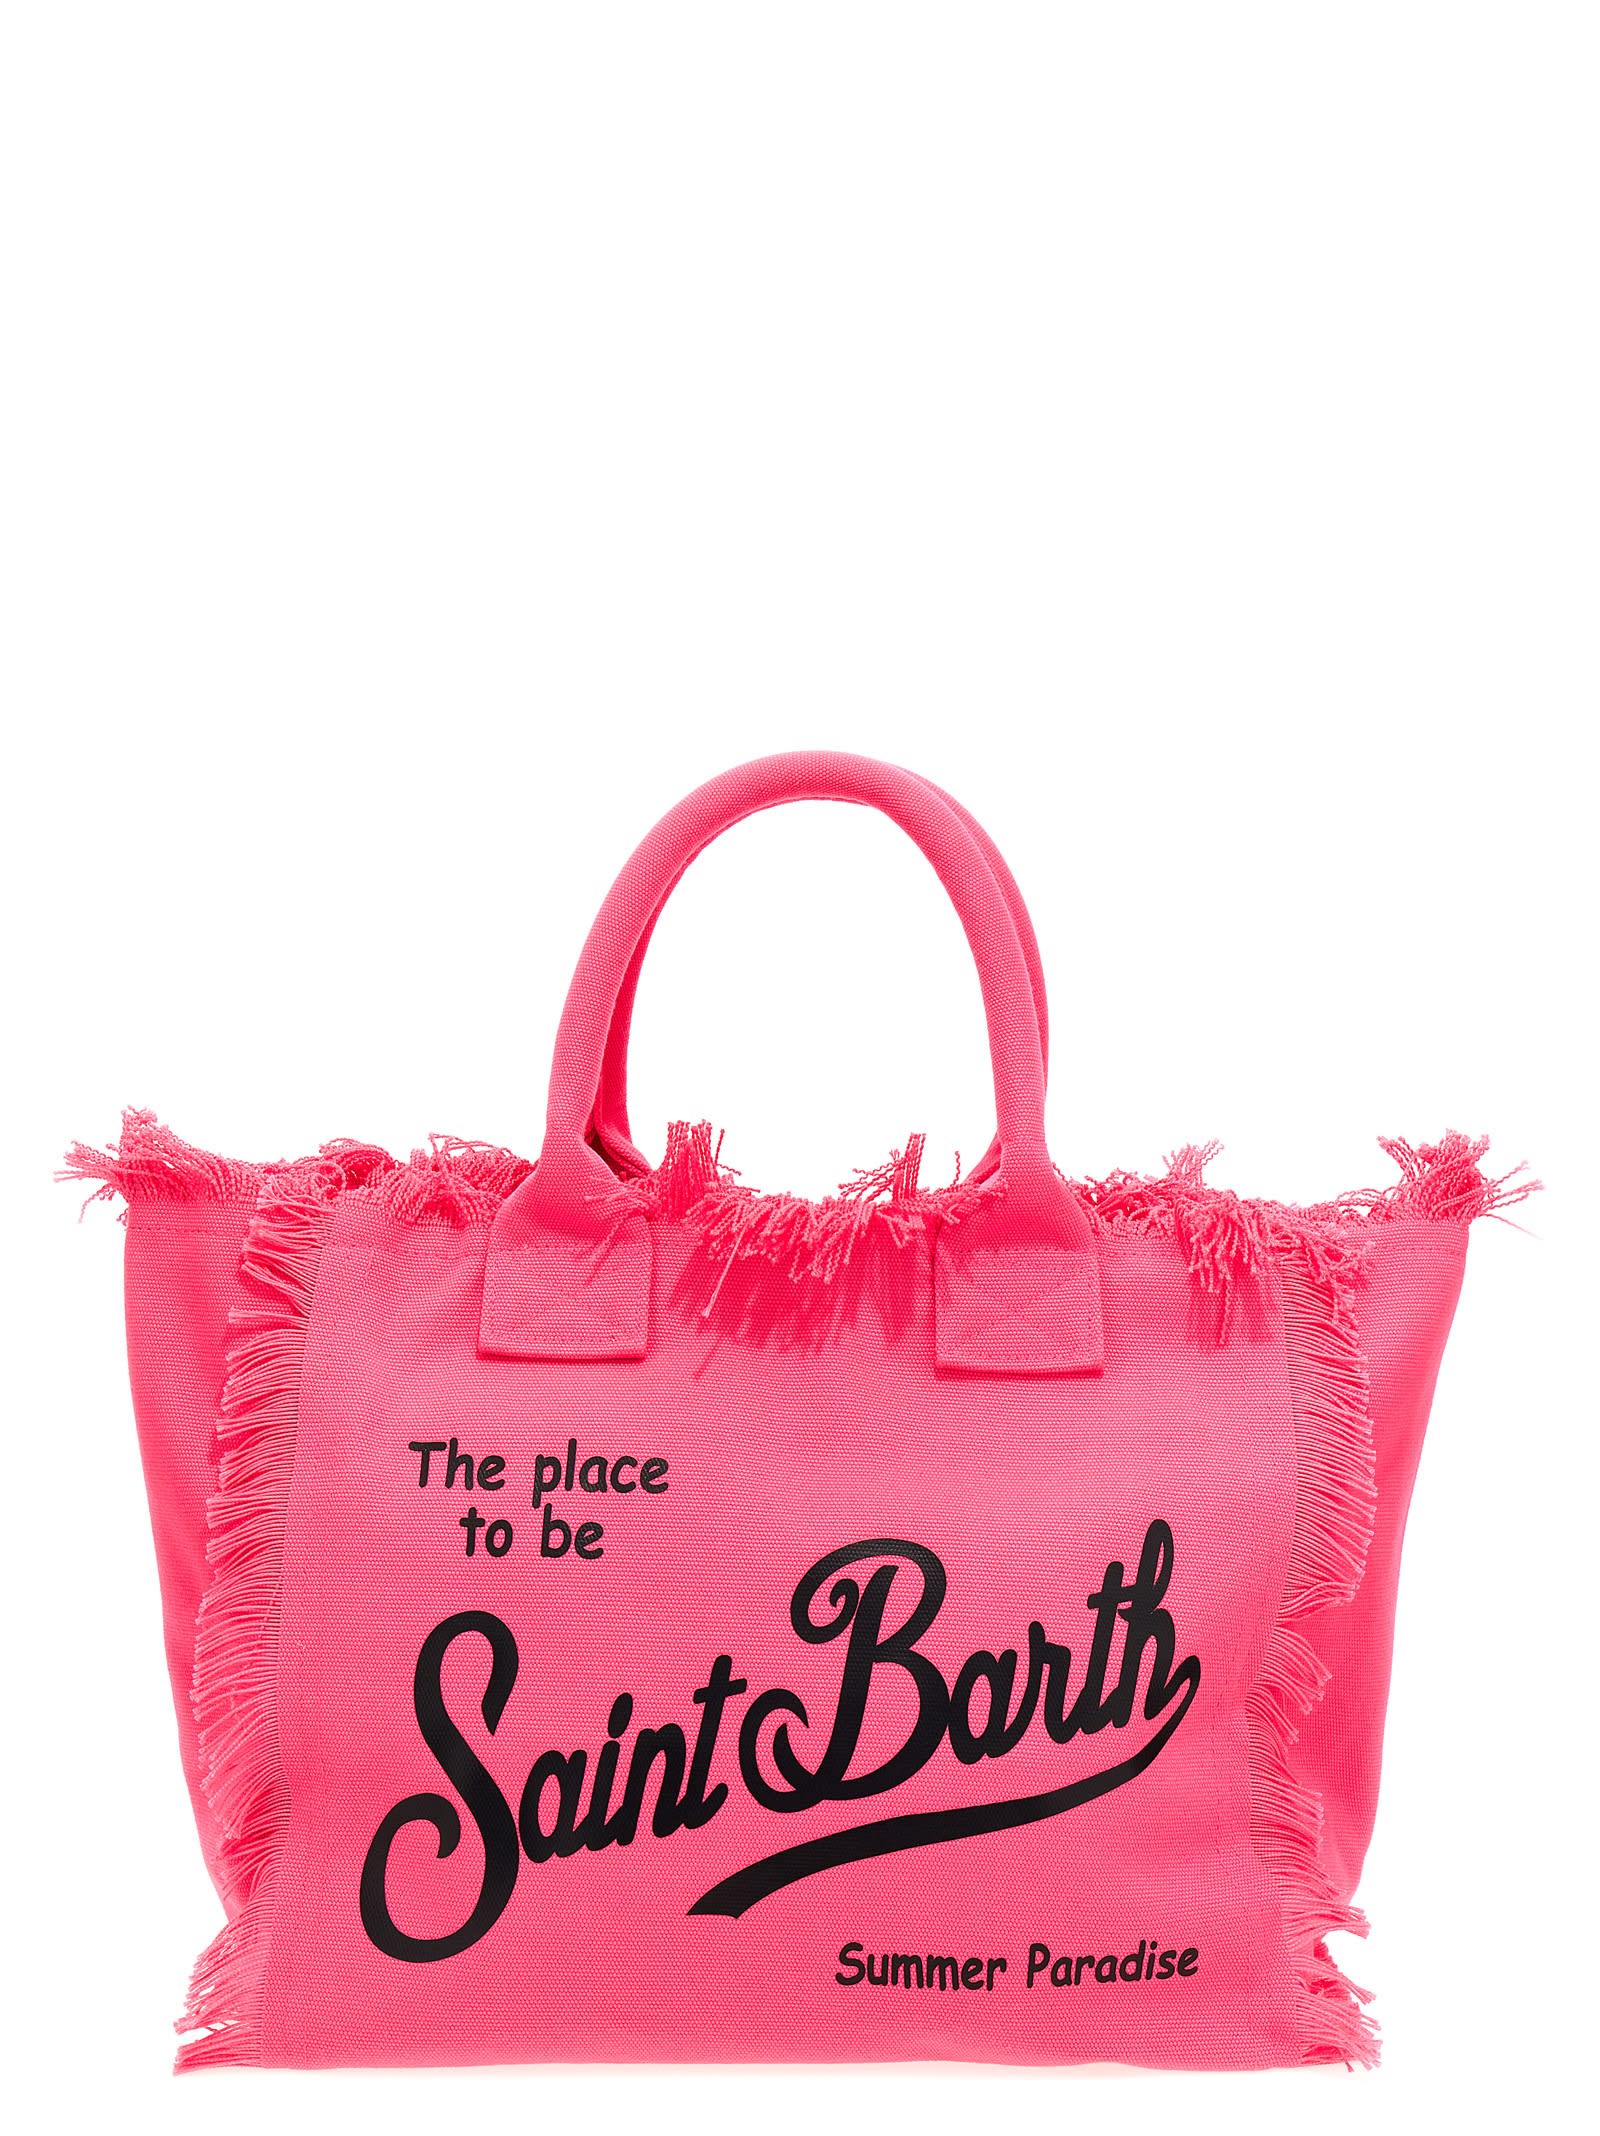 vanity Shopping Bag